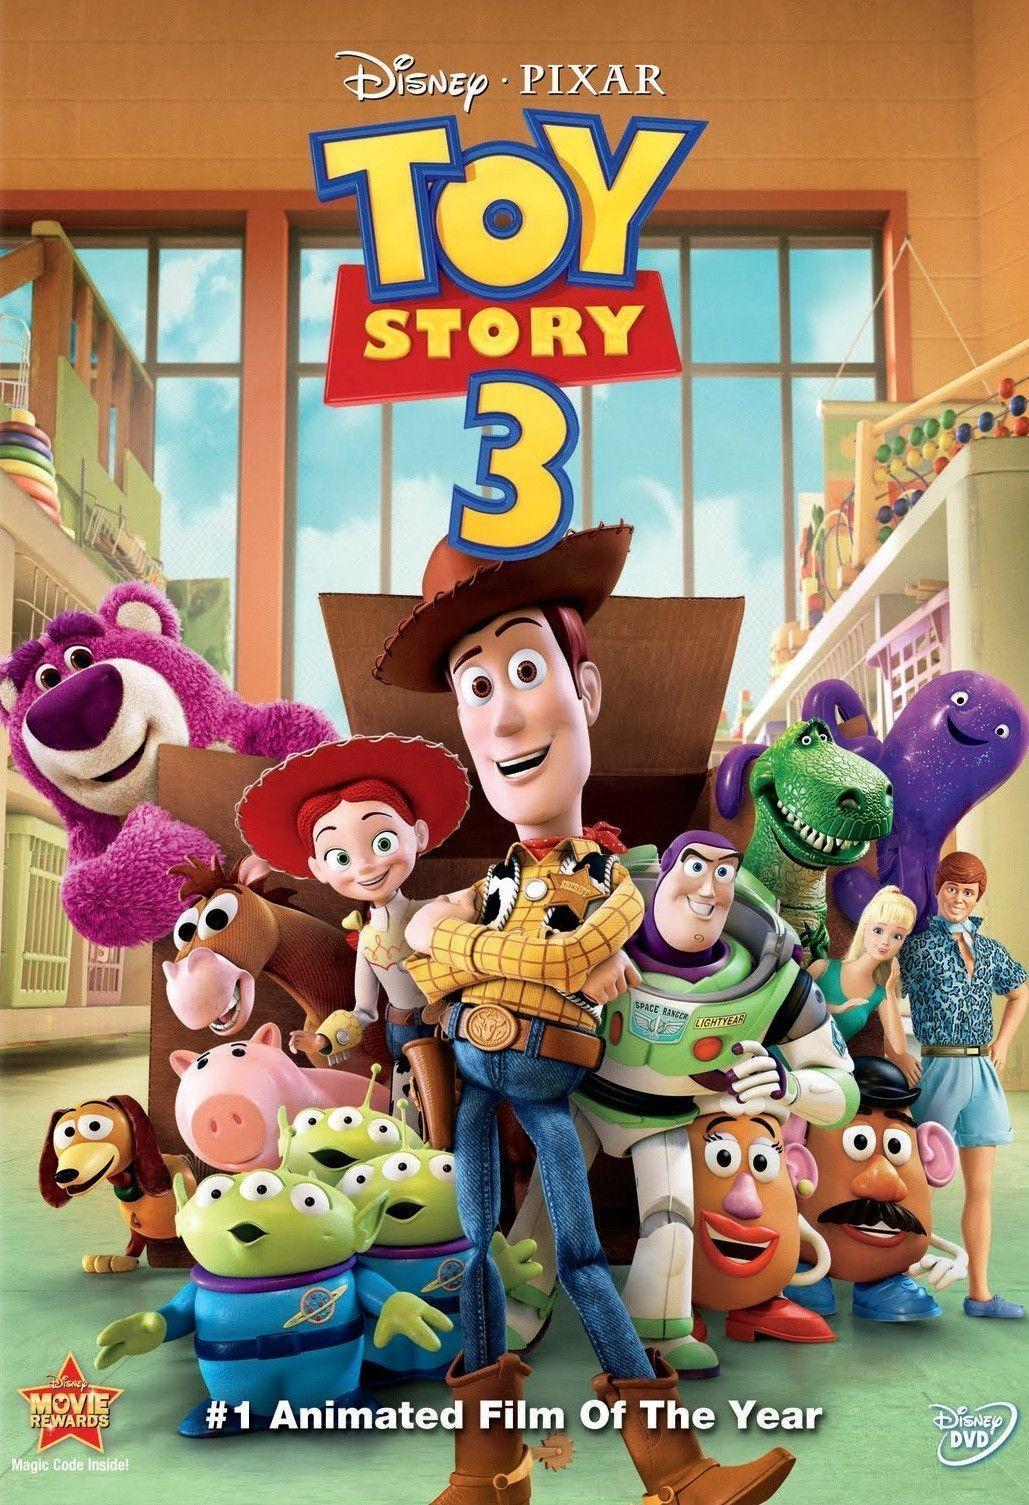 Pixar Disney DVD Logo - Toy Story 3 (Disney, DVD) | Toy story | Pinterest | Movies, Toy ...